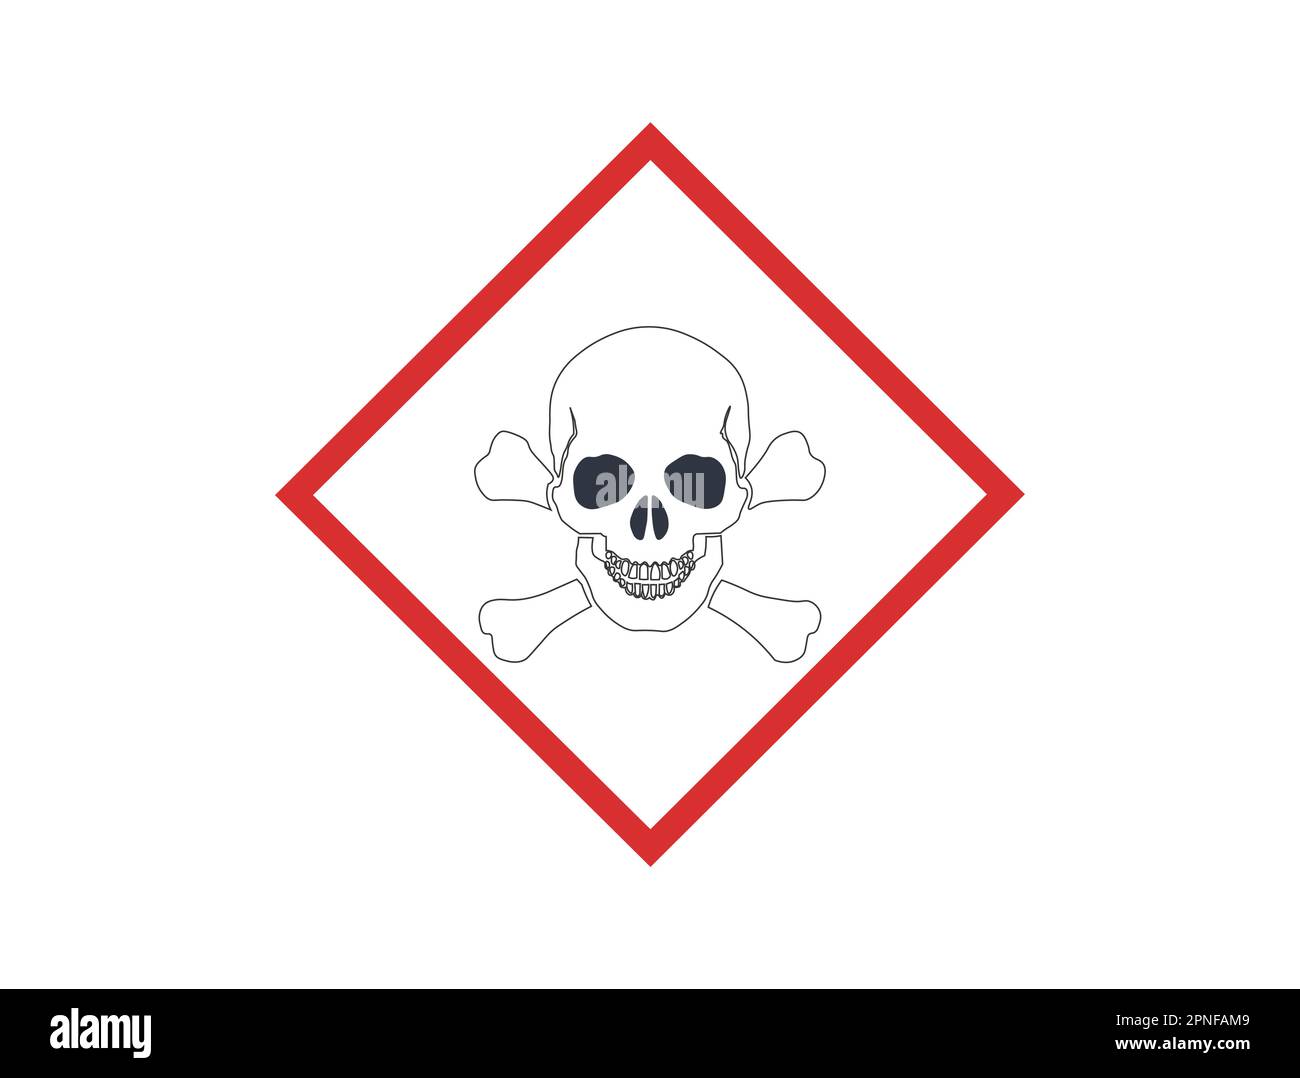 Acute Toxic Hazard Symbol. Vector Illustration for Safety Warning Stock ...